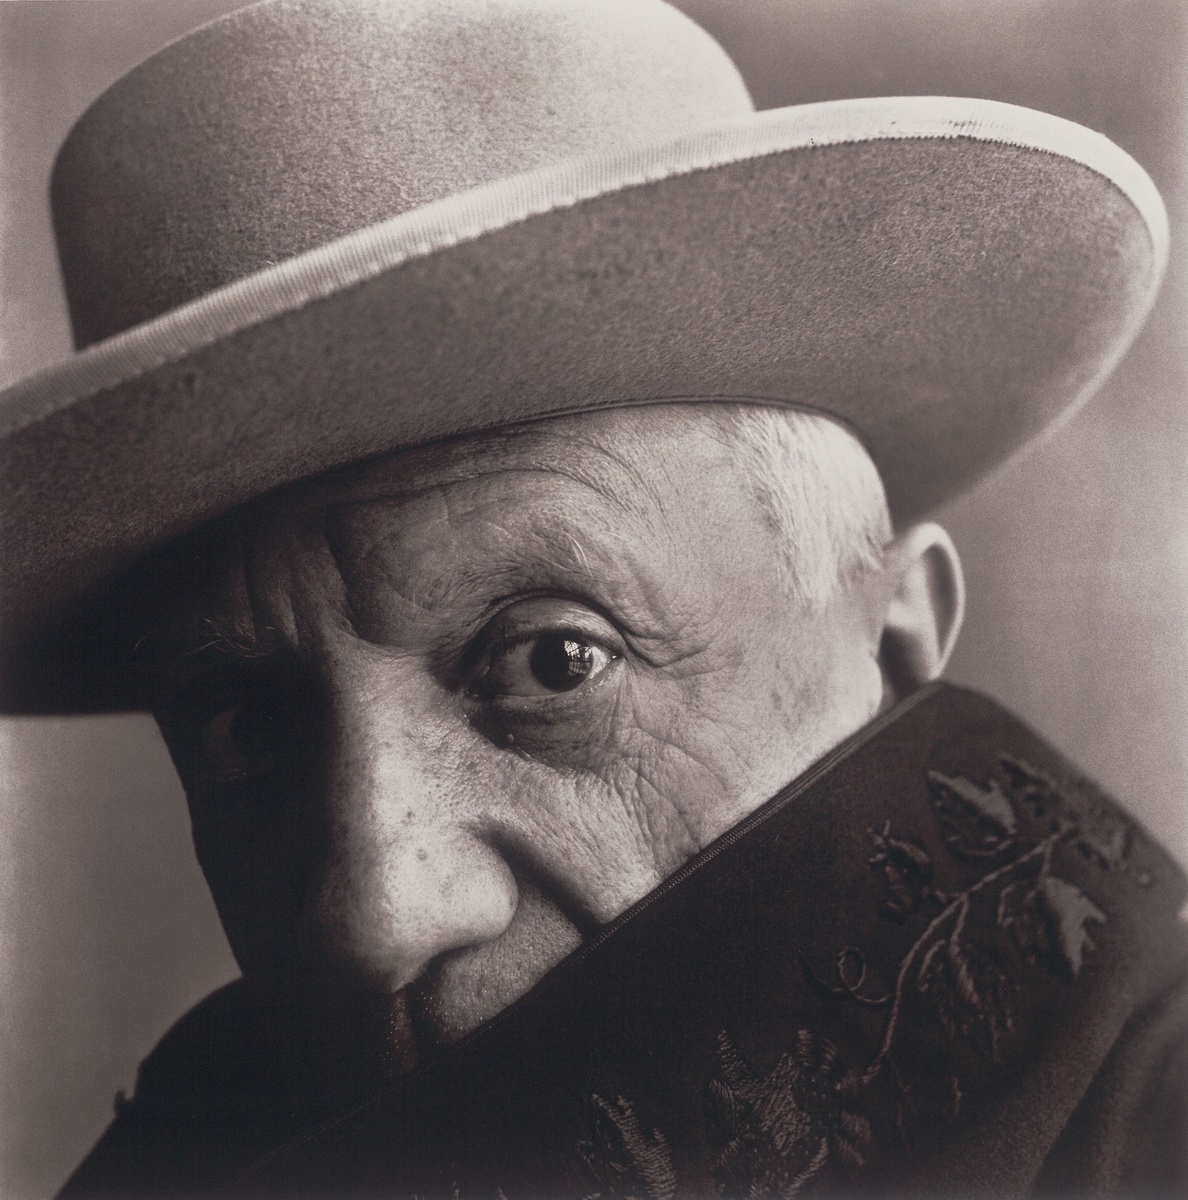 Irving Penn, Picasso at La Californie, Cannes, France, 1957 #aicphotography #irvingpenn artic.edu/artworks/94524/